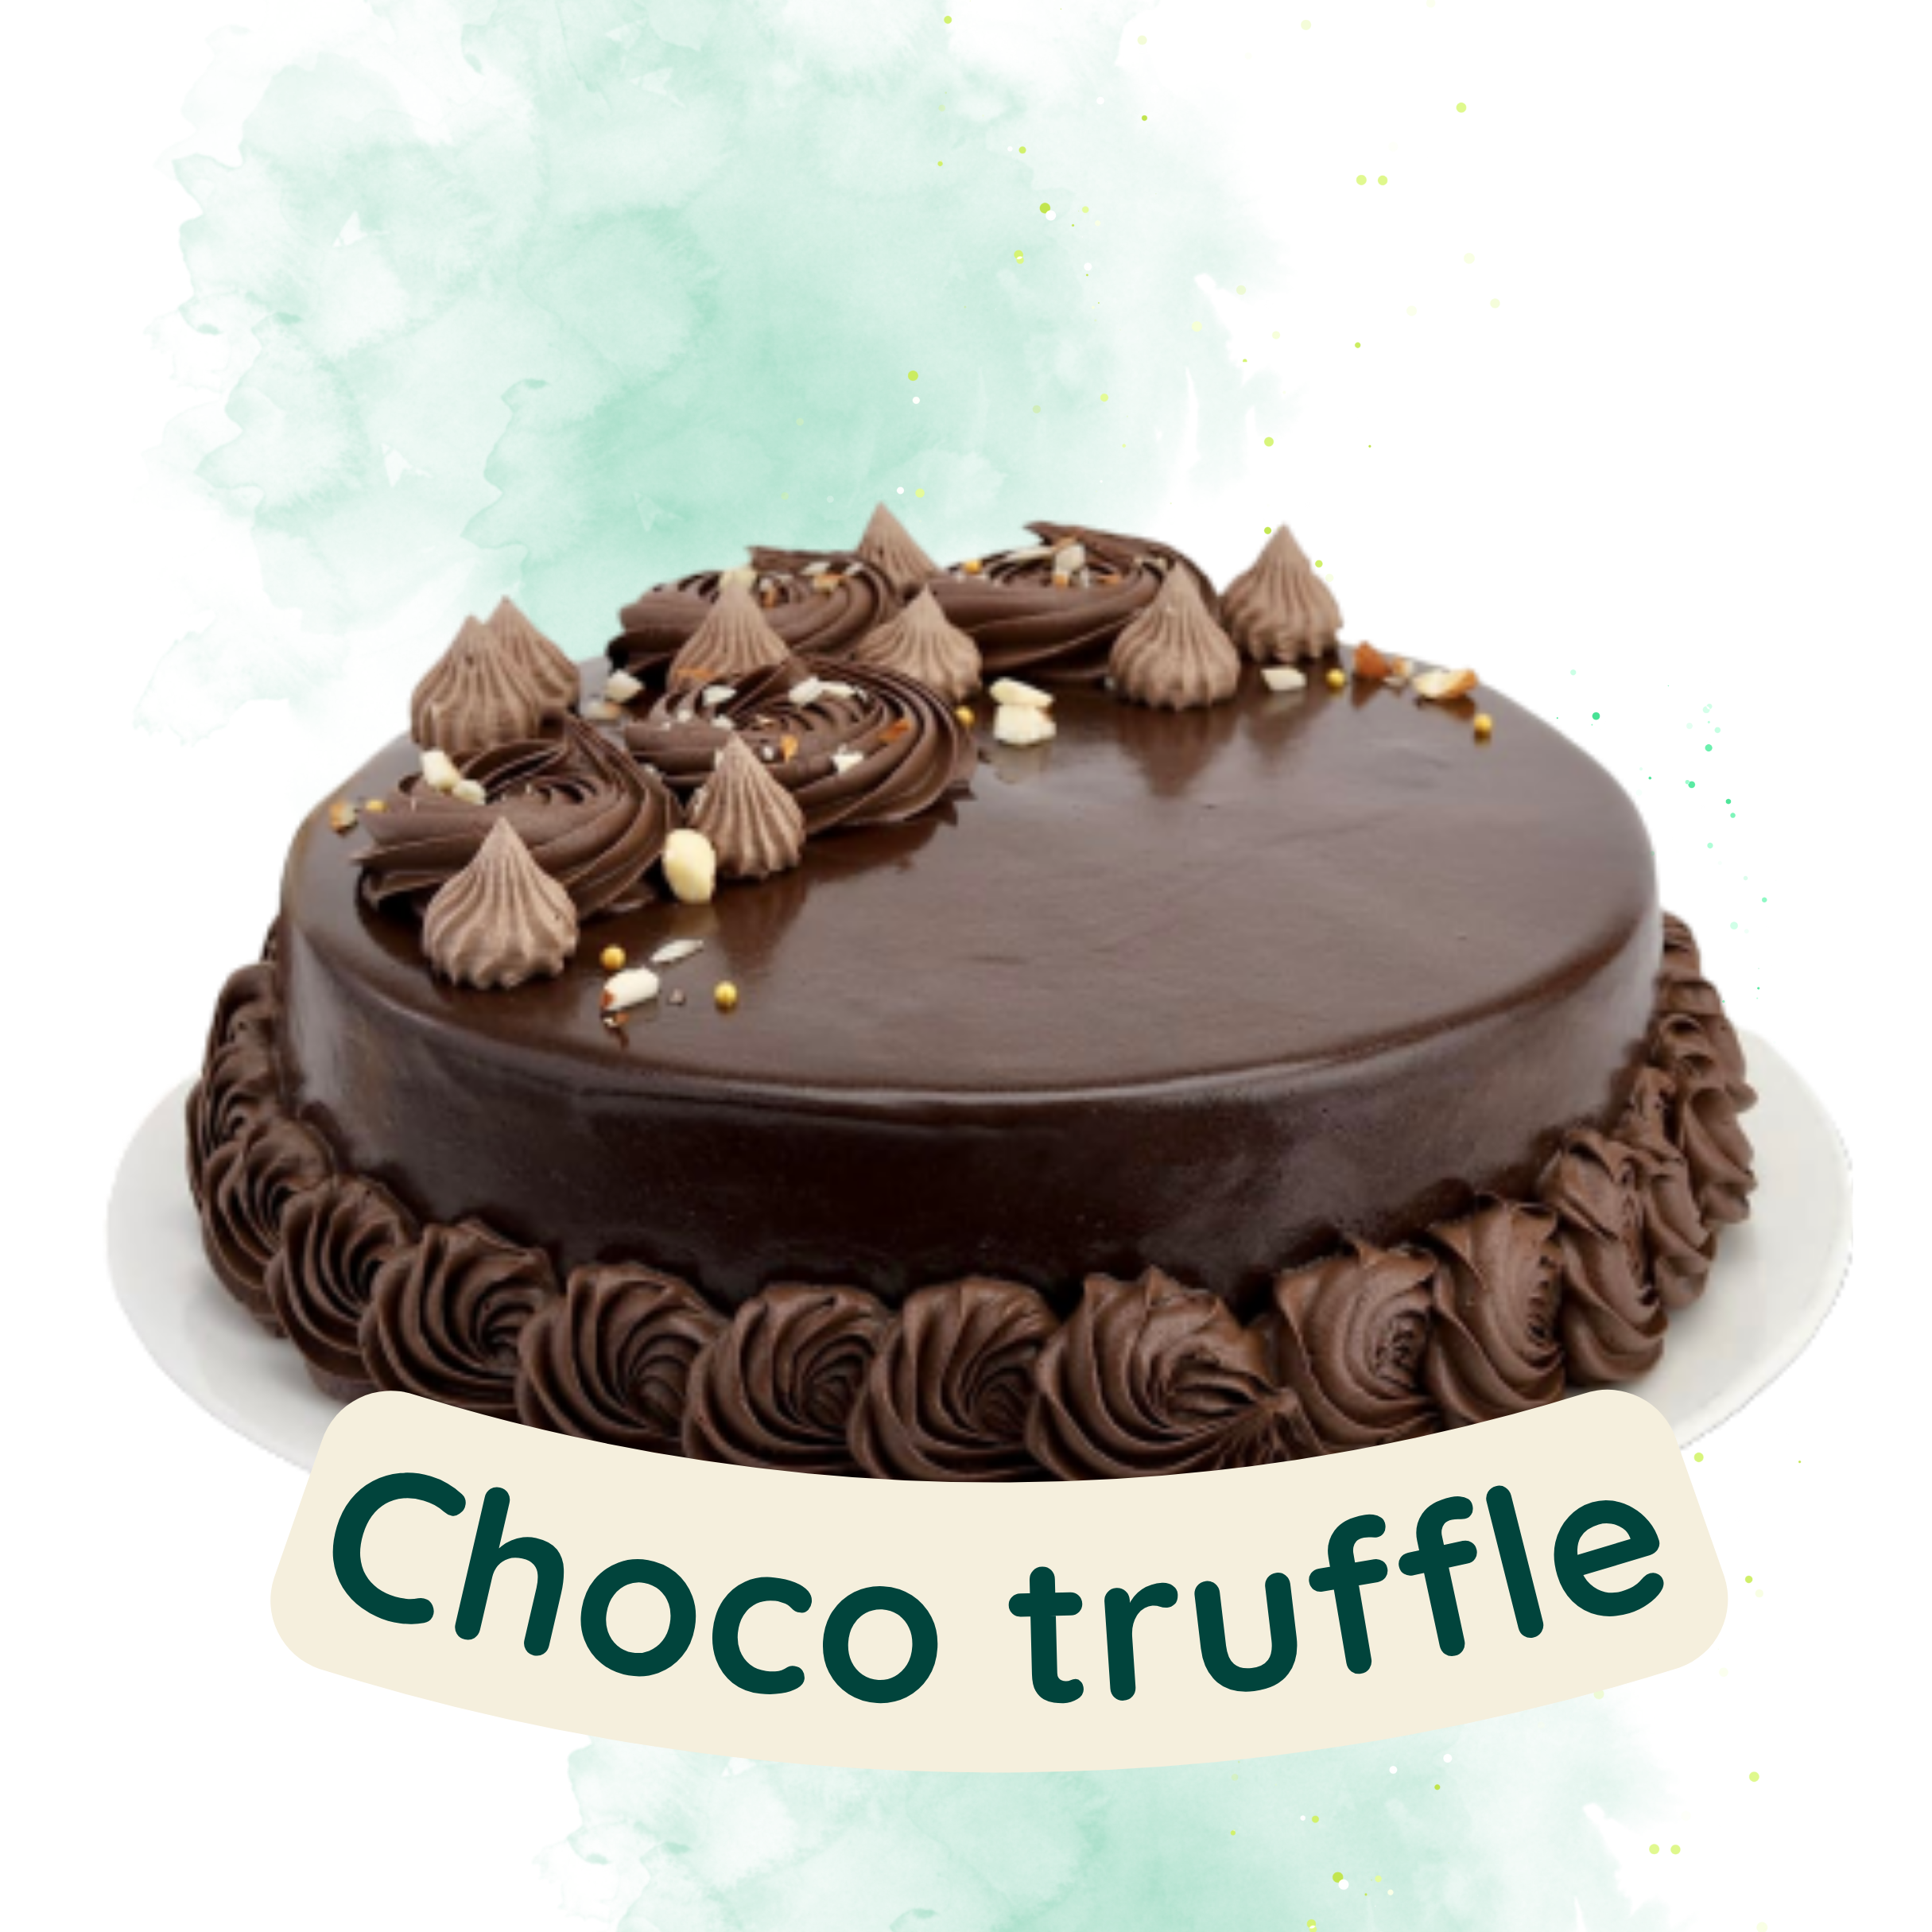 Eggless Chocolate Truffle Cake | bakewithlove